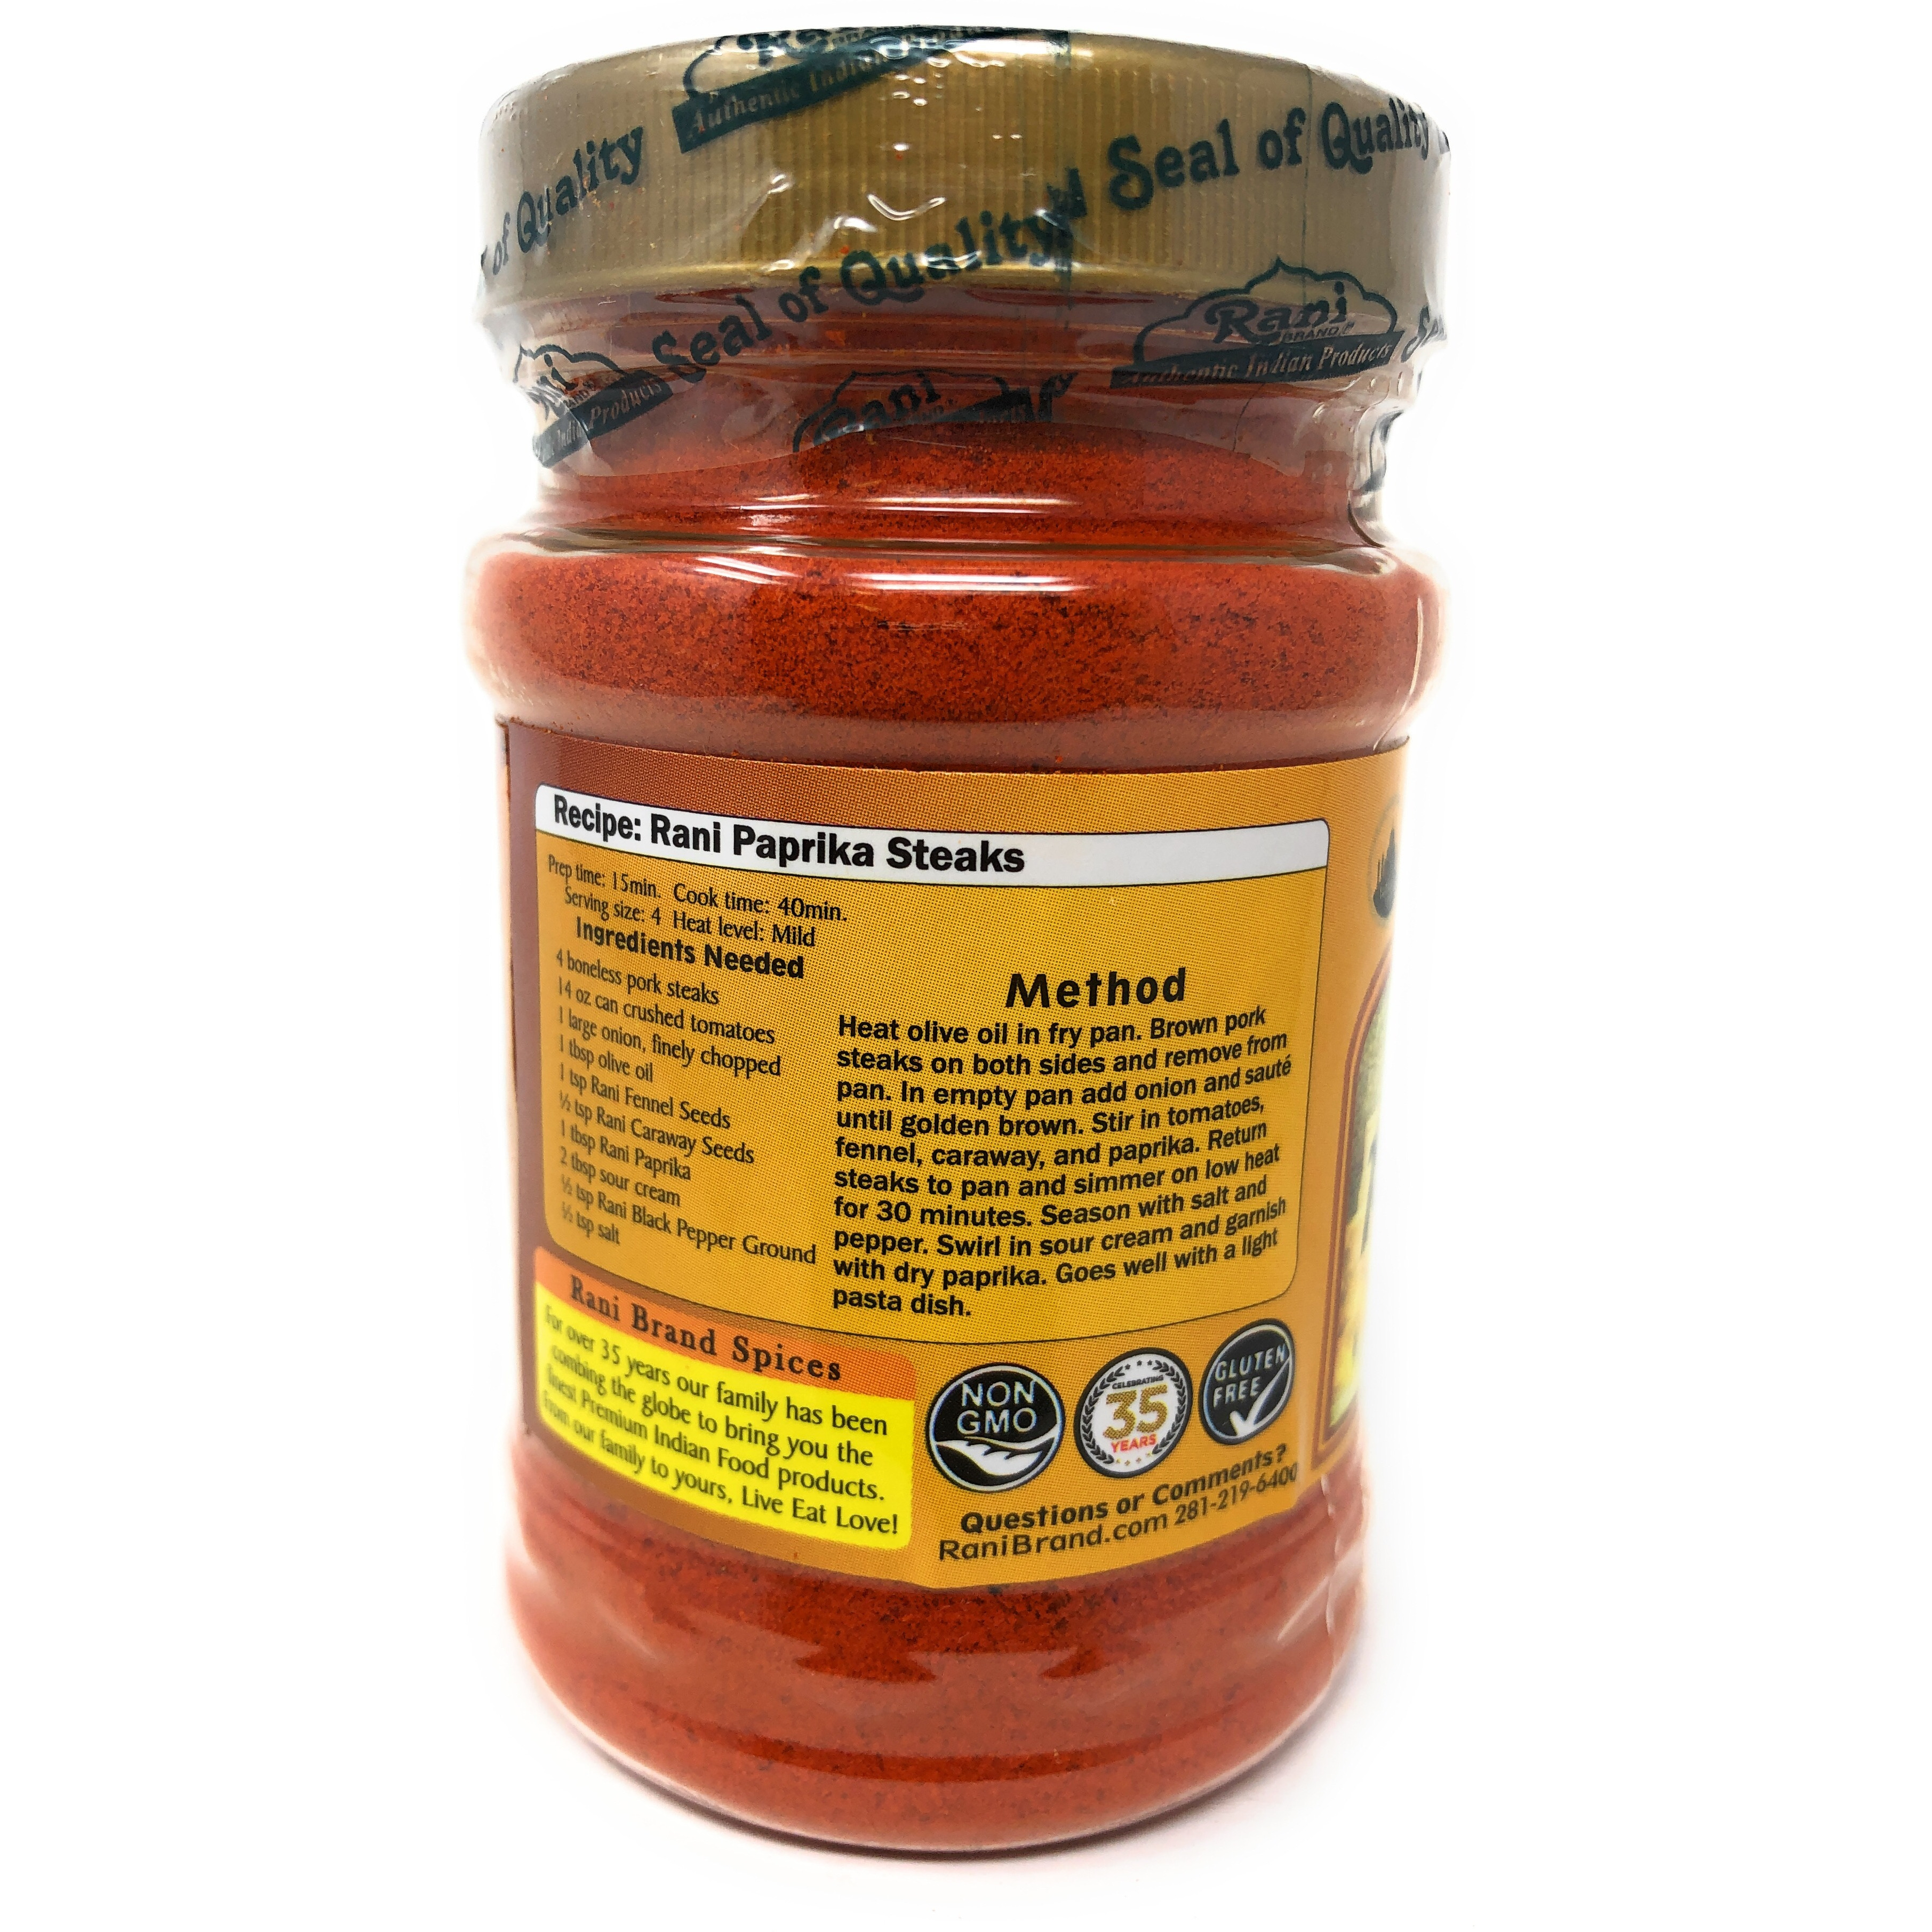 Rani Paprika (Deggi Mirch) Spice Powder, Ground 3oz (85g) ~ All Natural, Salt-Free | Vegan | No Colors | Gluten Free Ingredients | NON-GMO